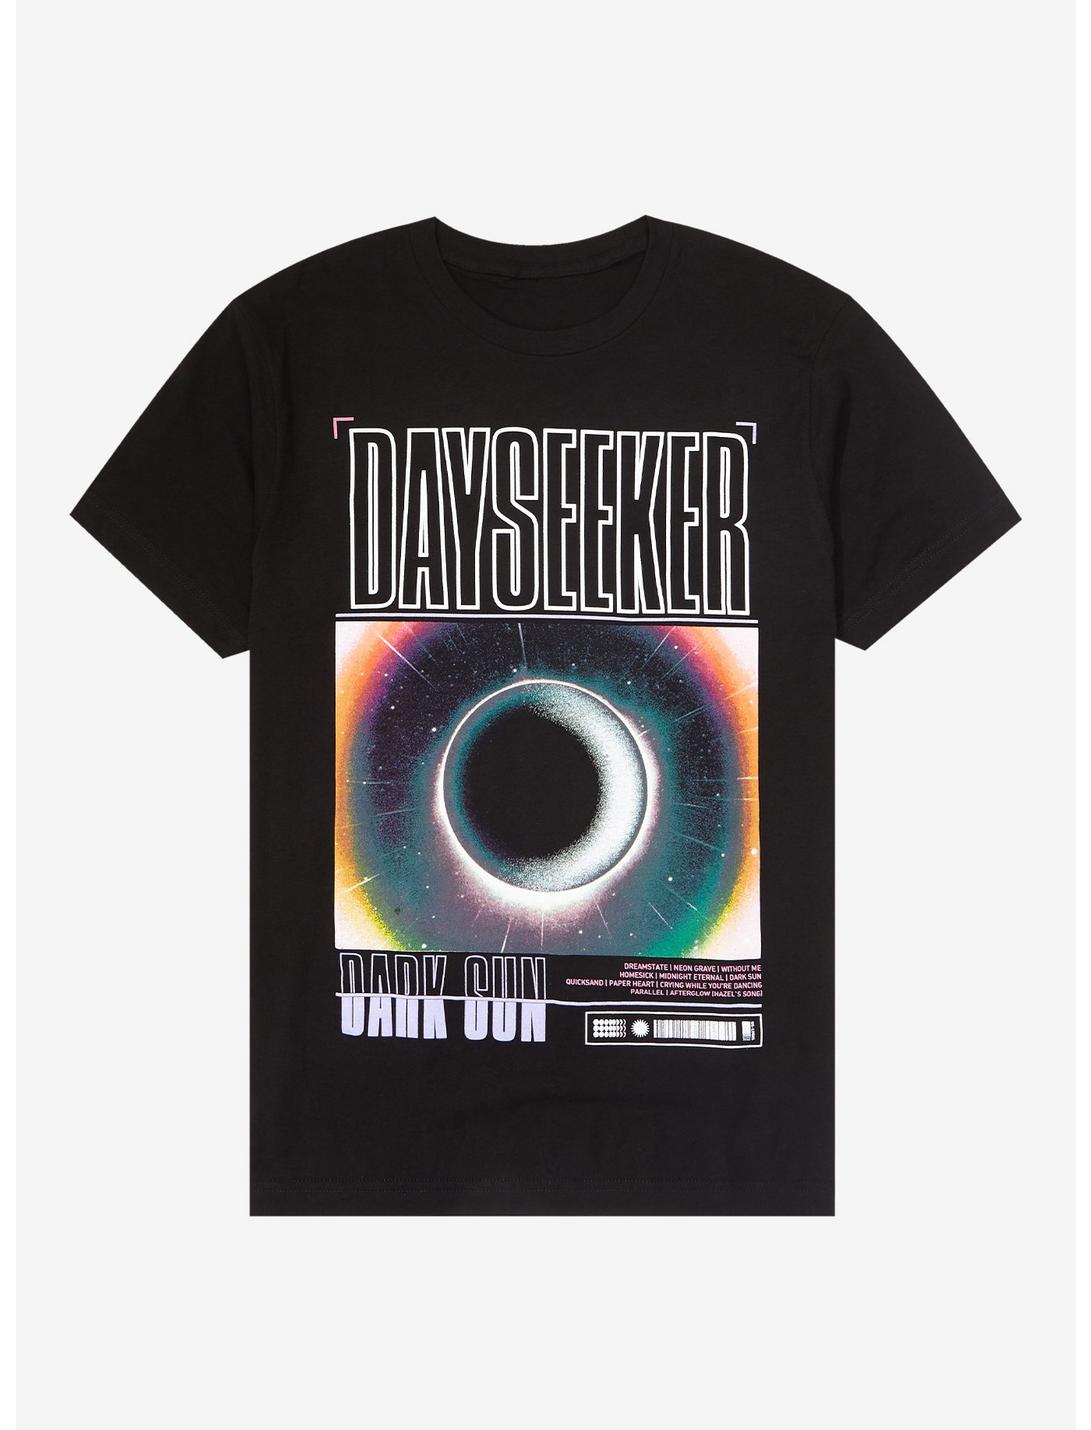 Dayseeker Dark Sun Track List T-Shirt, BLACK, hi-res